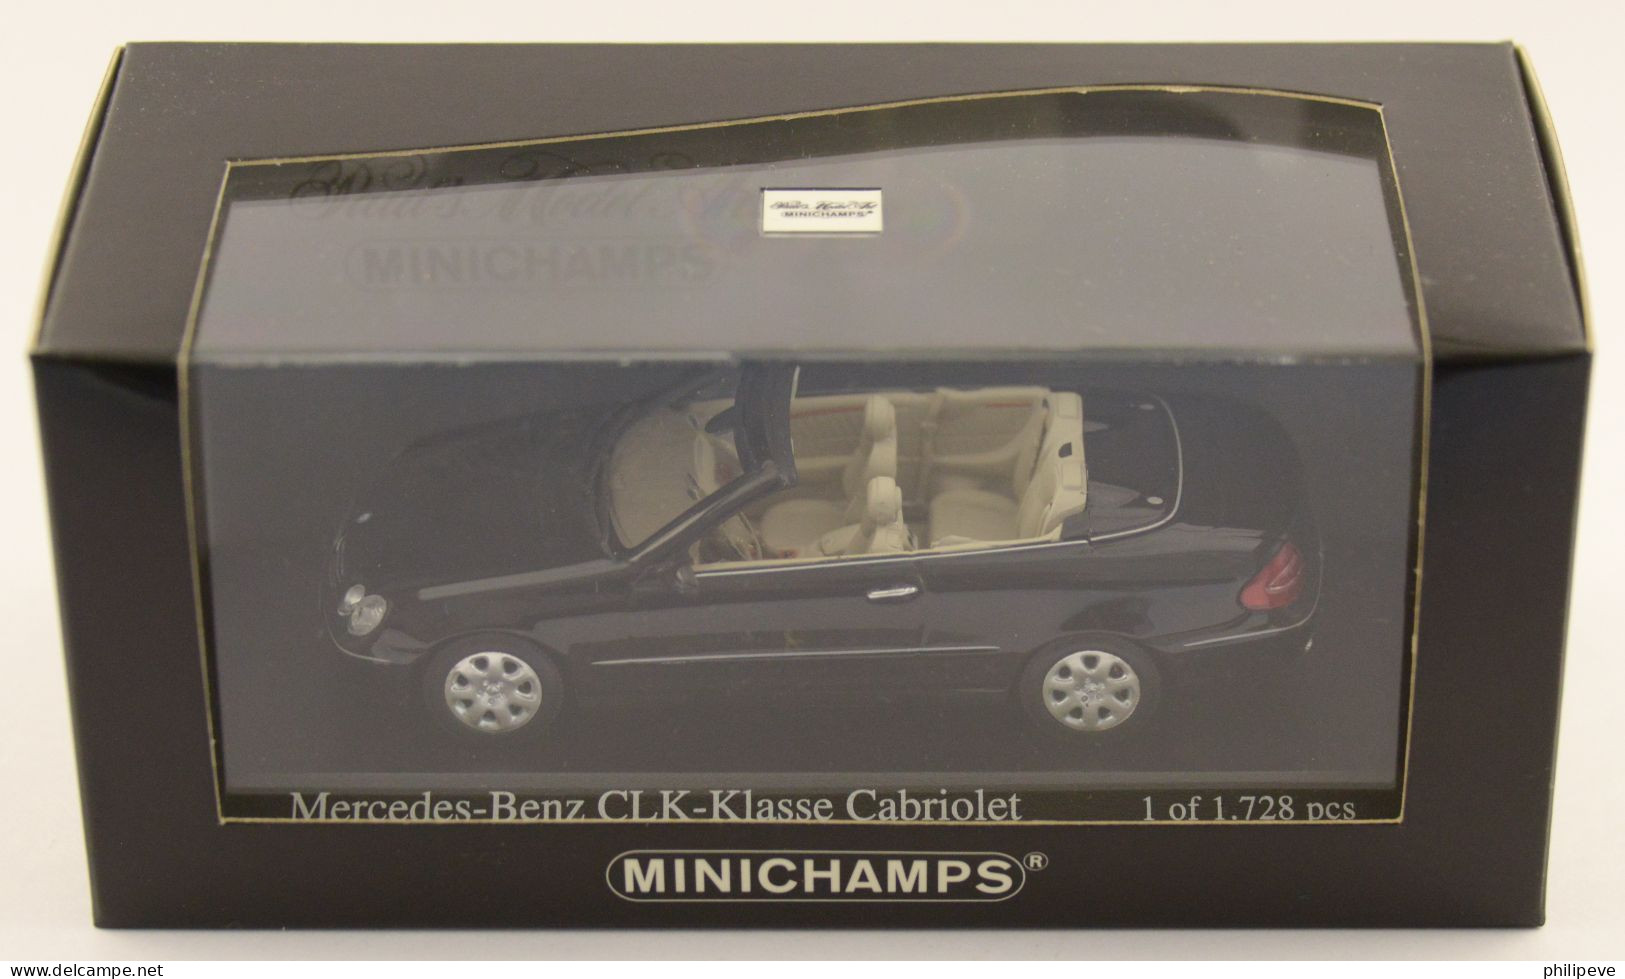 MERCEDES-BENZ CLK-Klasse Cabriolet 2003 - MINICHAMPS 1:43